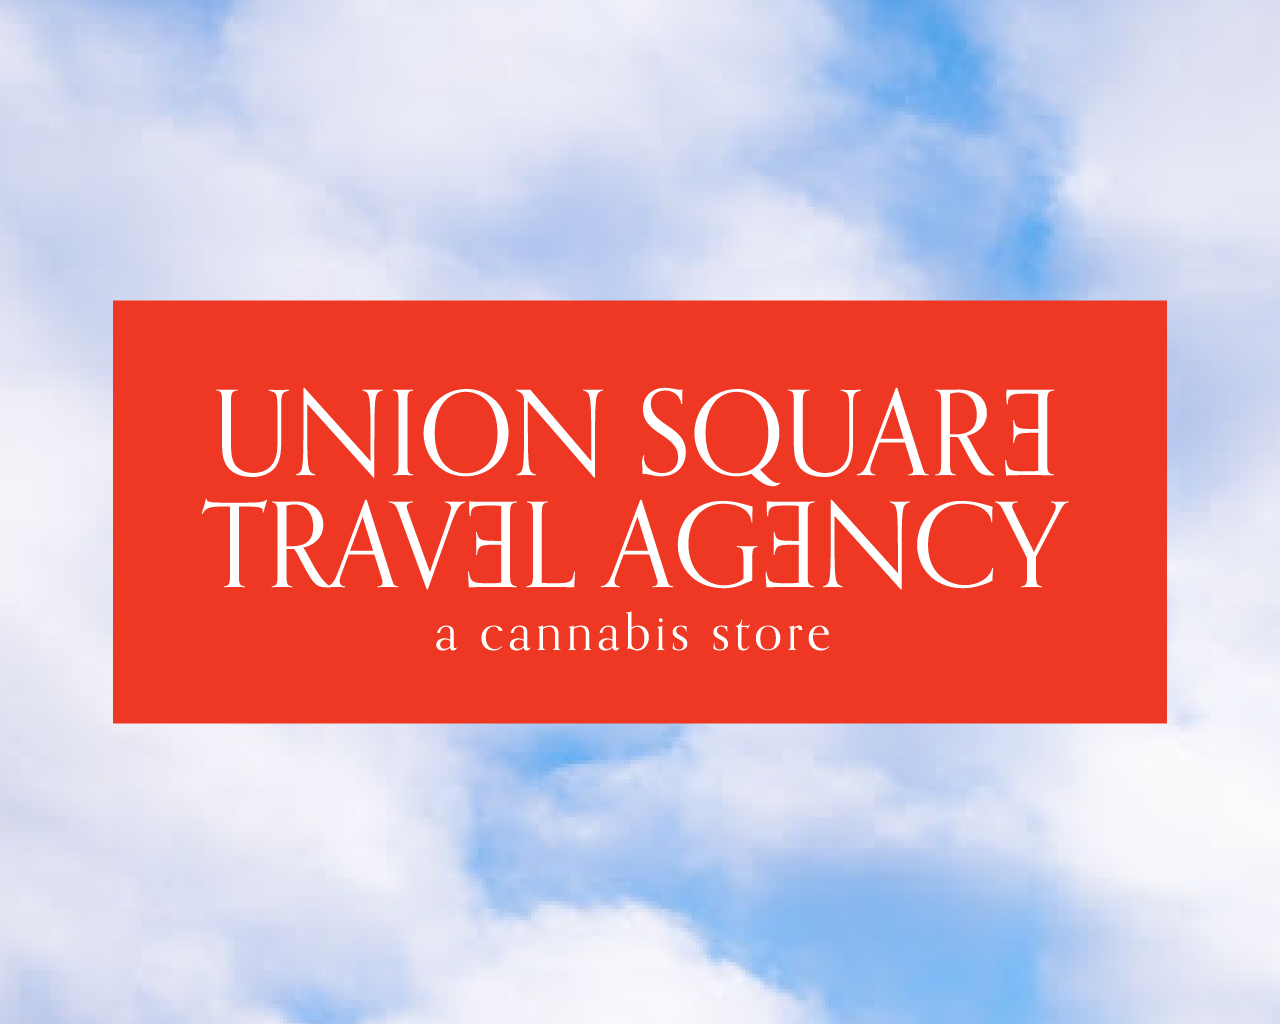 Union Square Travel Agency: Cannabis Dispensary New York